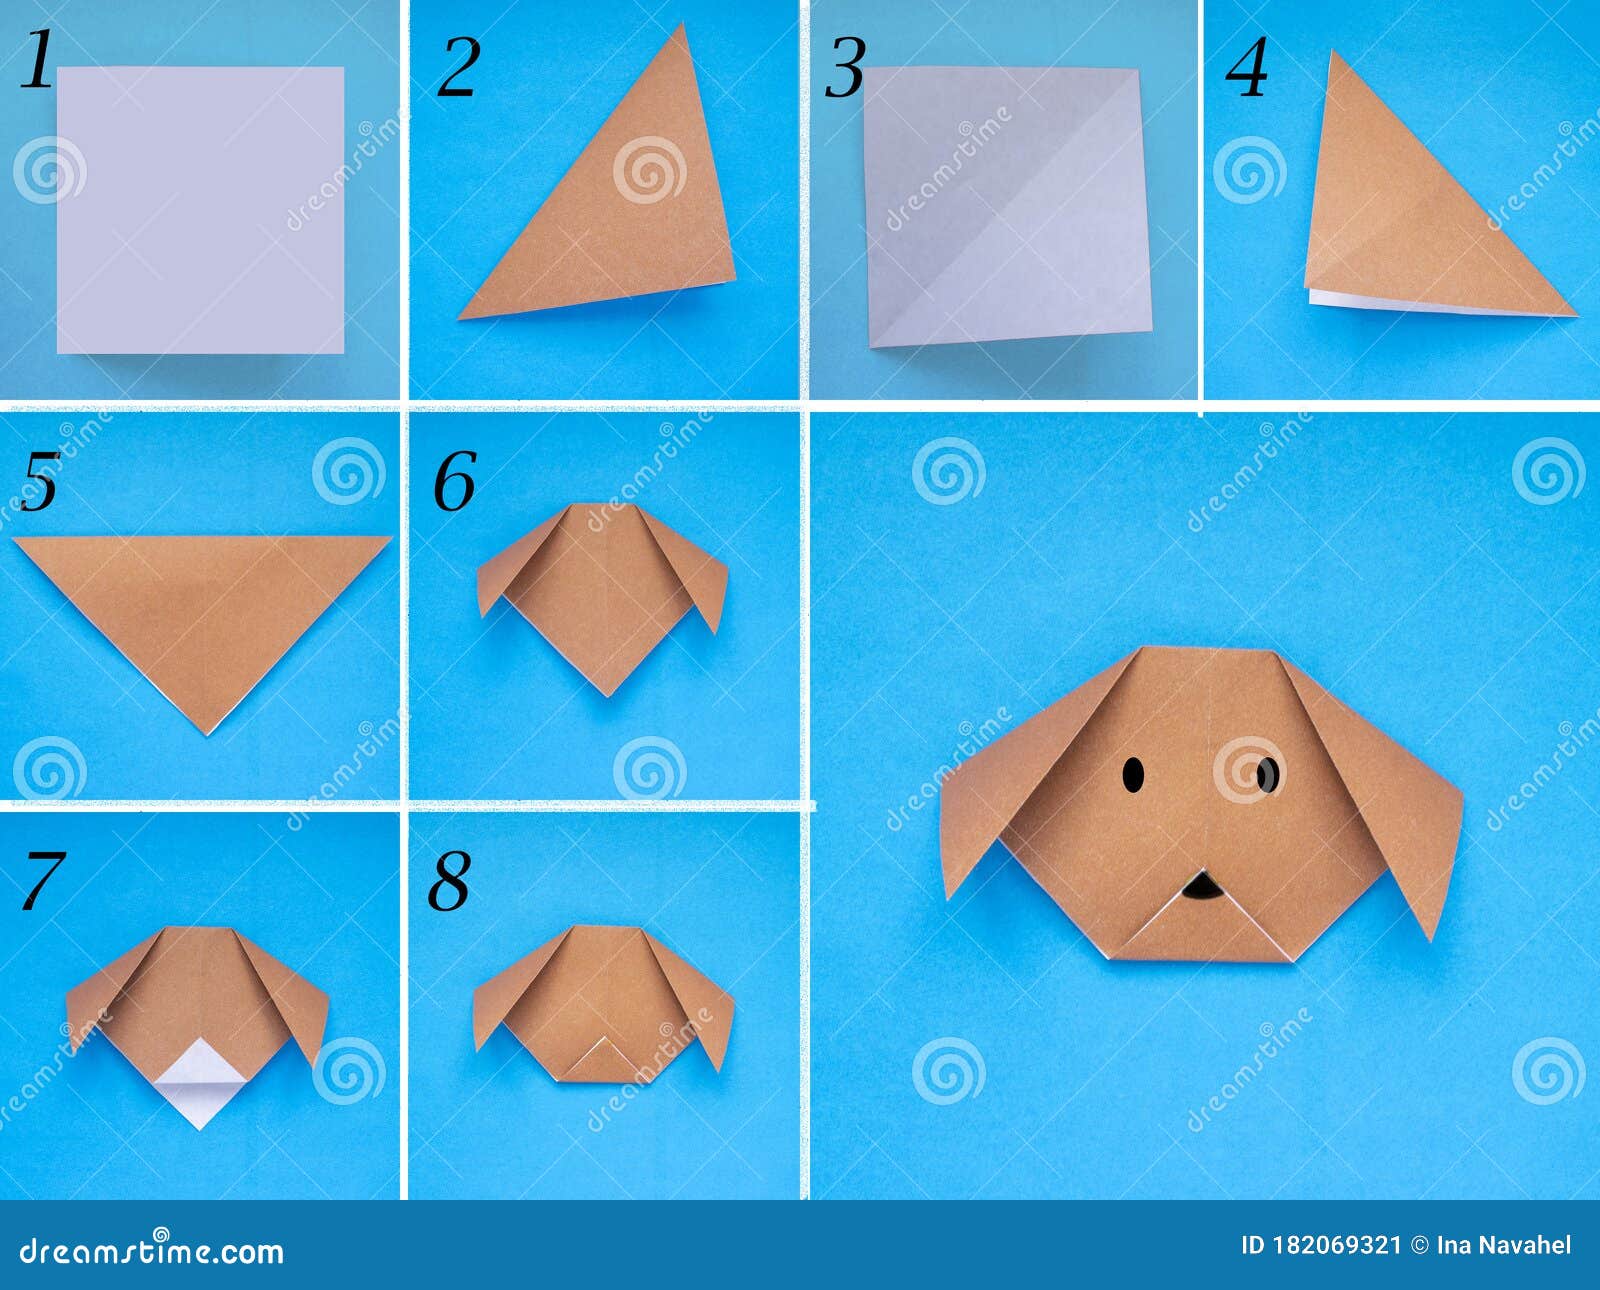 How Do You Fold A Paper Dog